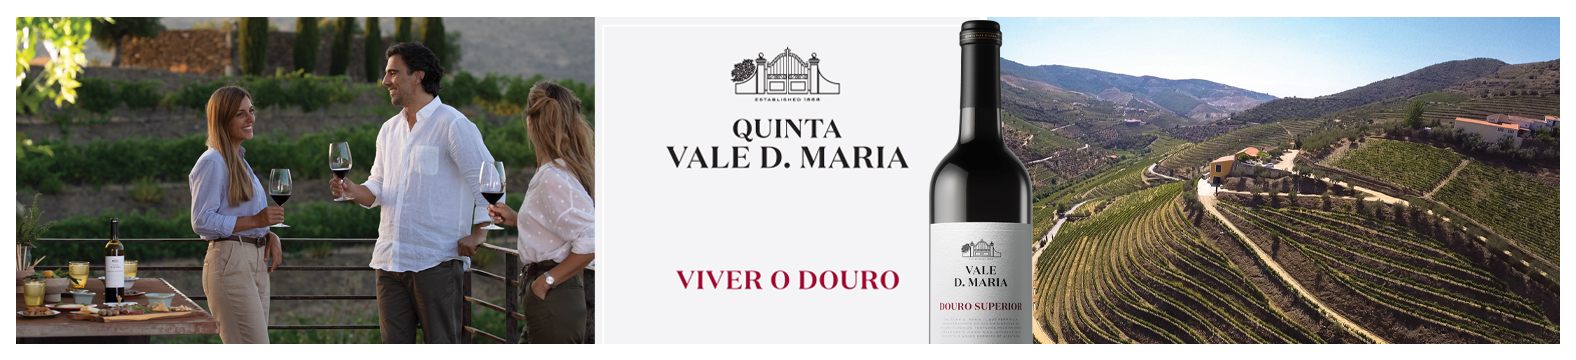 Quinta Vale D. Maria invites to “Live the Douro”